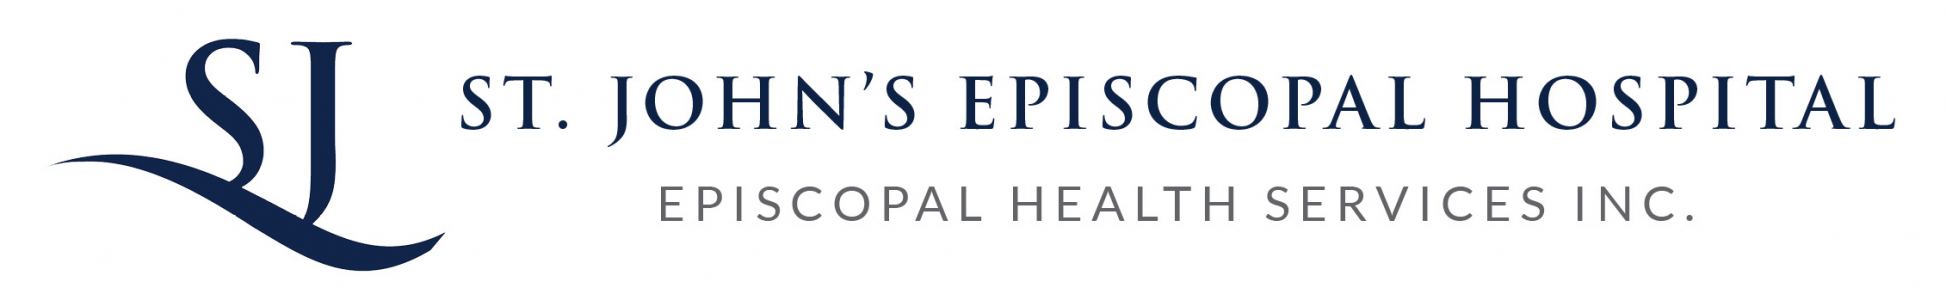 St. John's Episcopal Hospital Logo